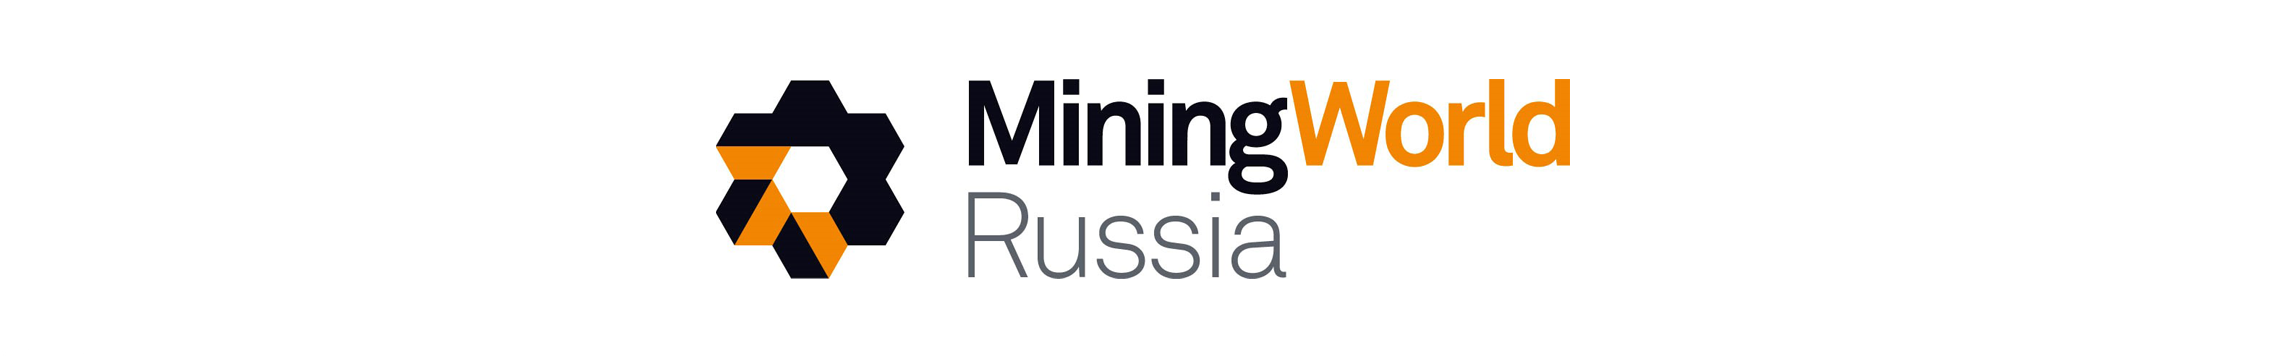 Mining World Russia 2020